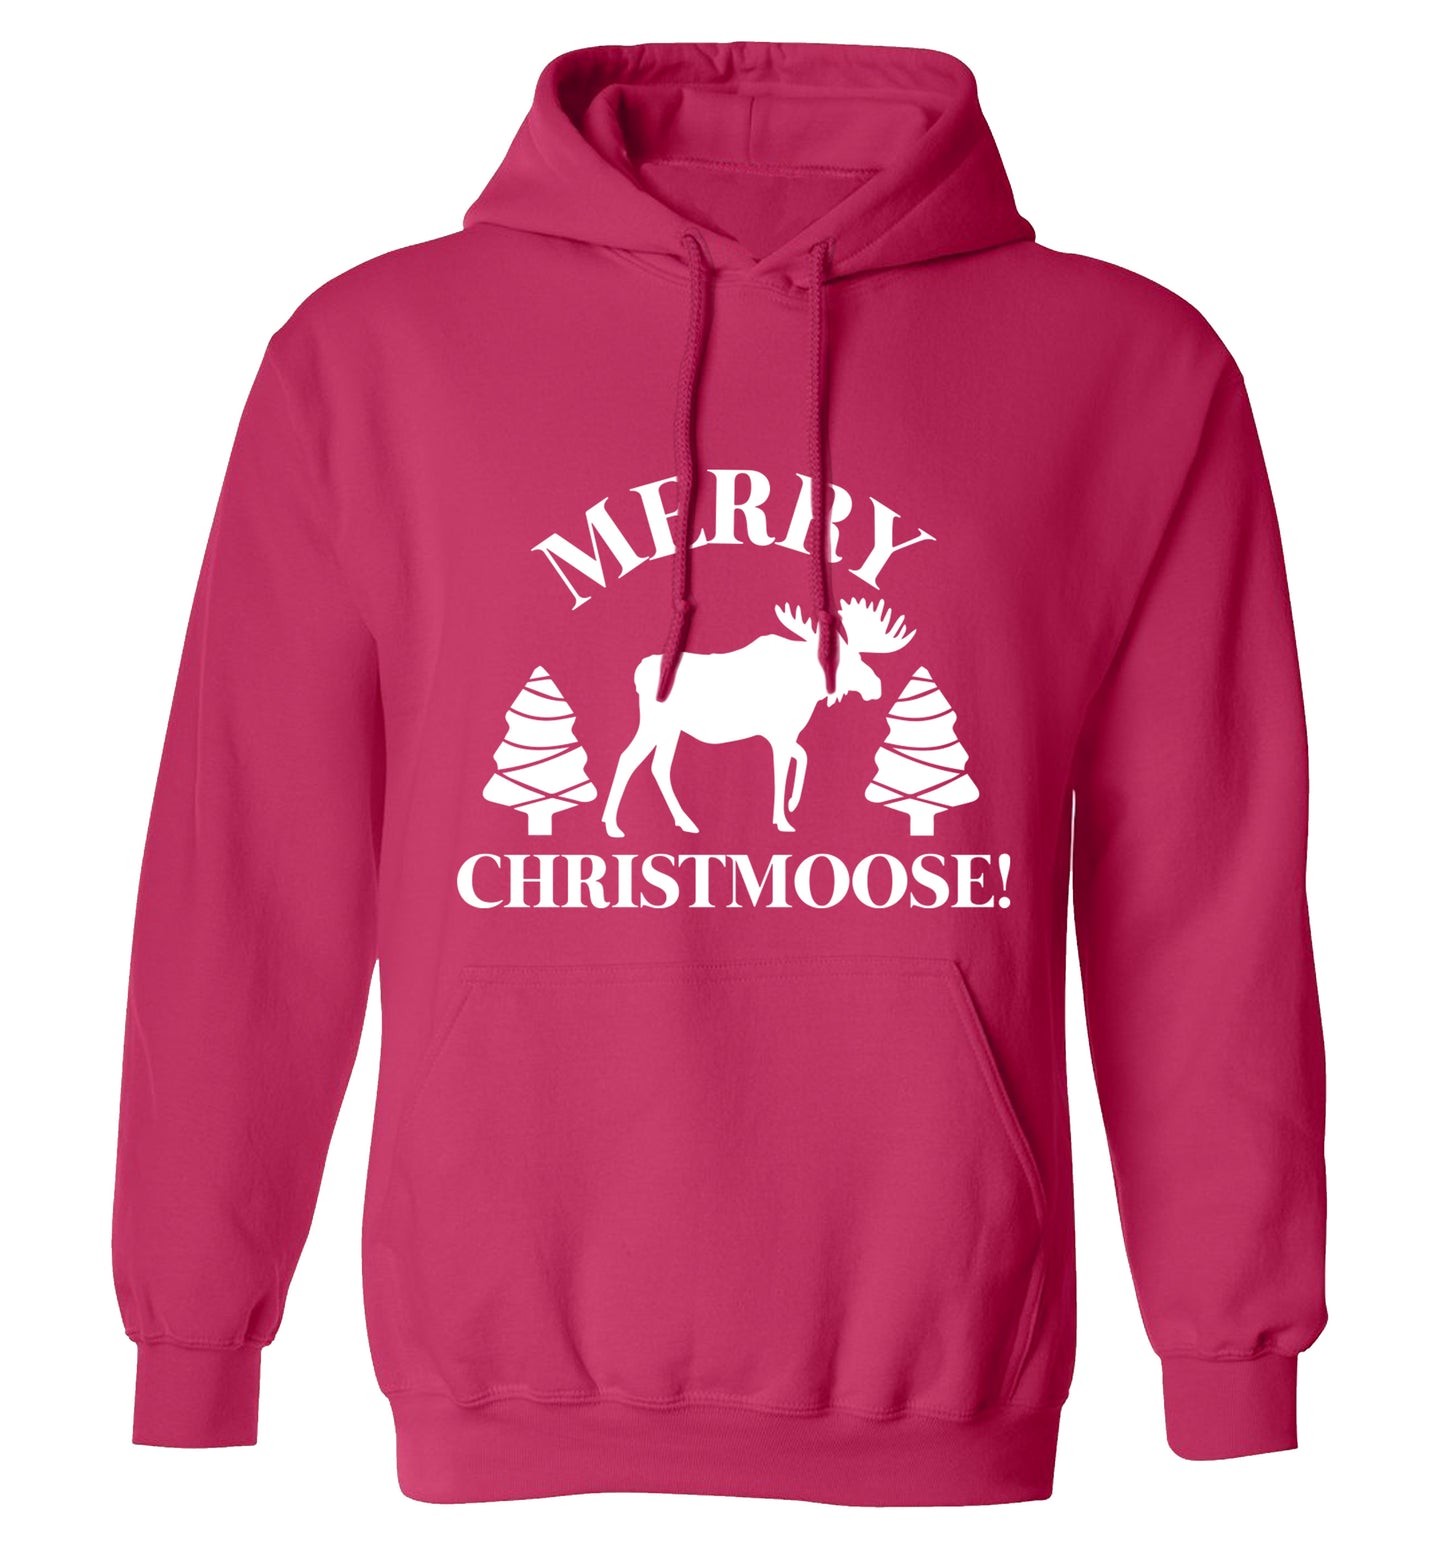 Merry Christmoose adults unisex pink hoodie 2XL